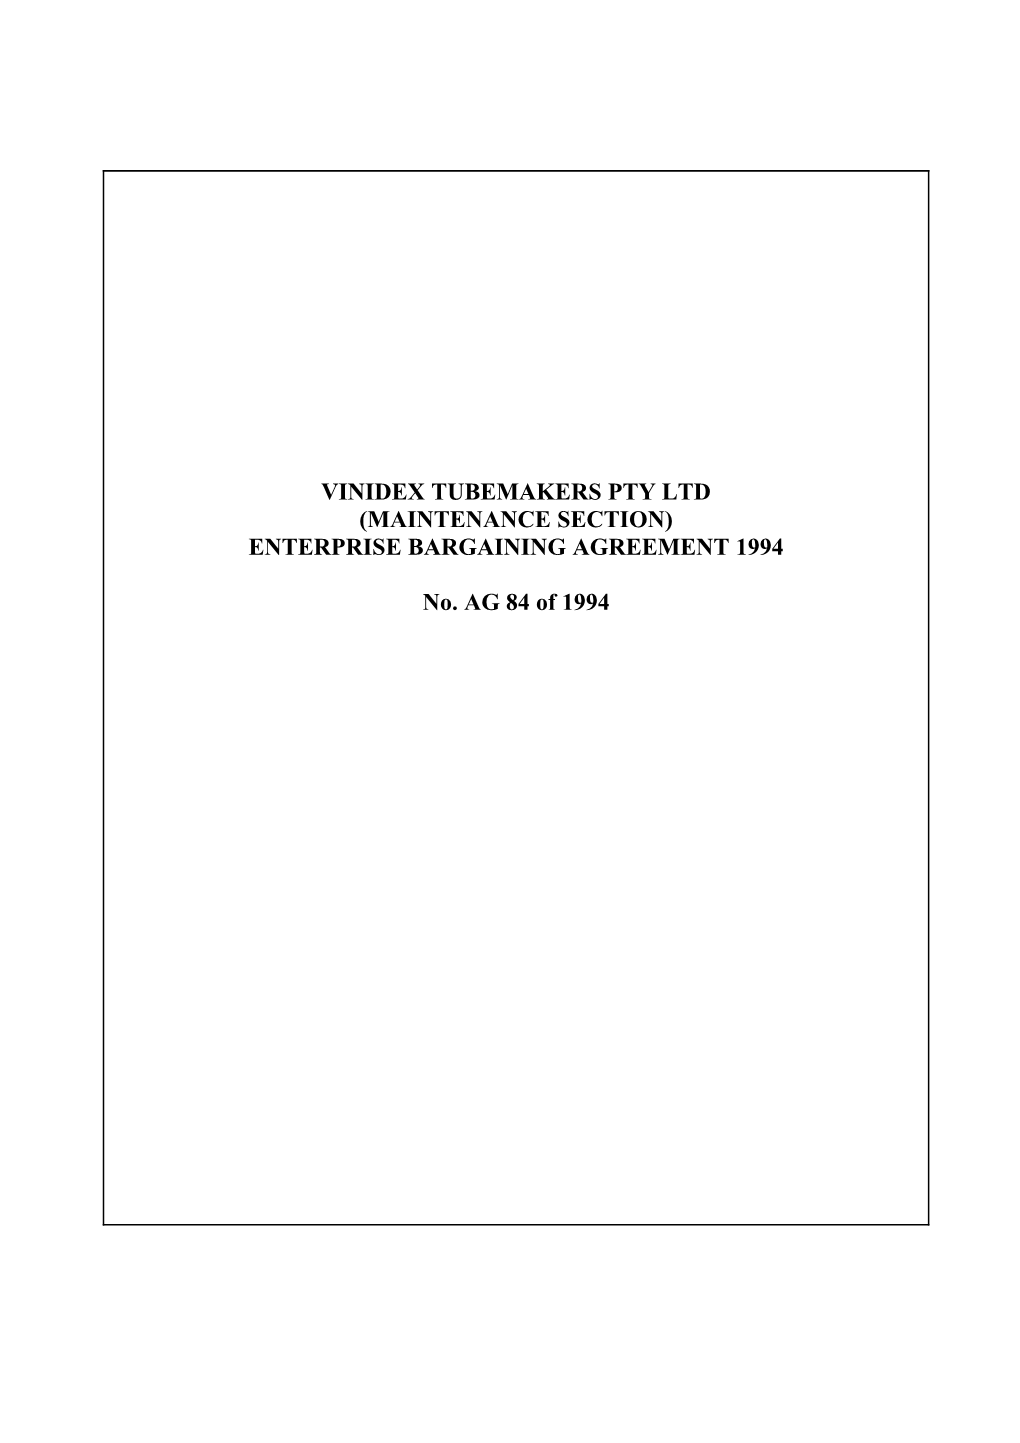 Vinidex Tubemakers Pty Ltd (Maintenance Section) Enterprise Bargaining Agreement 1994